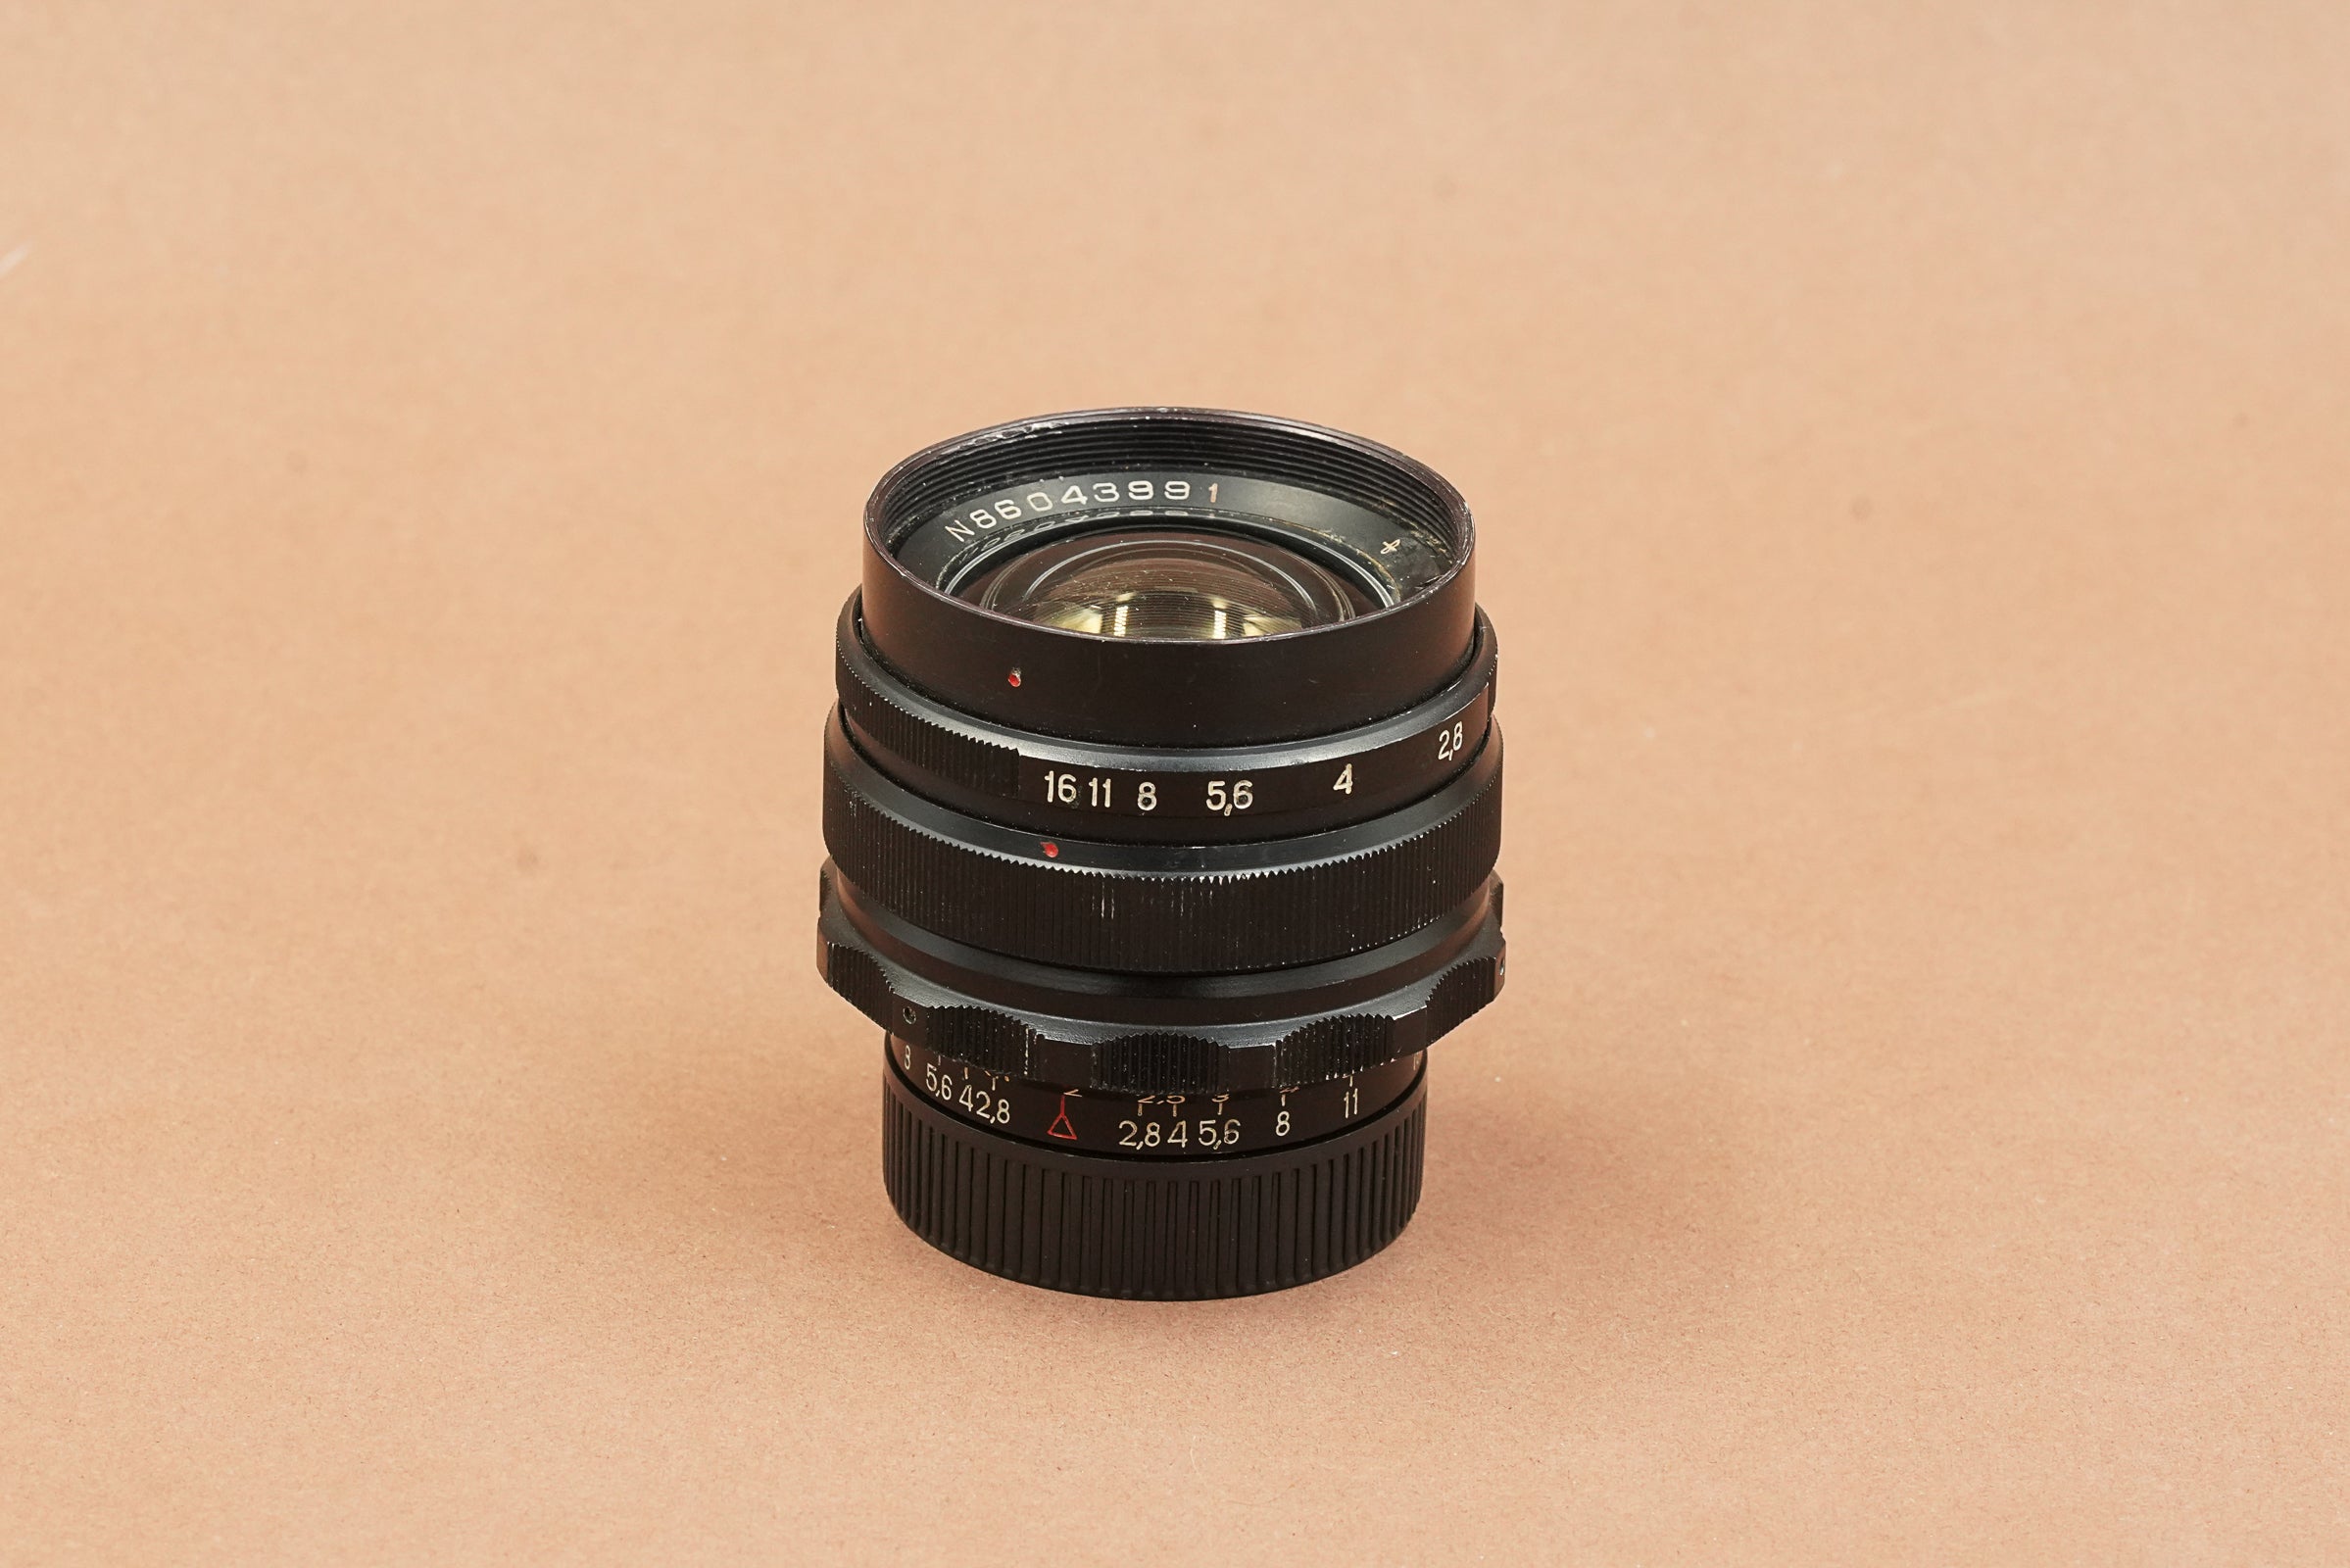 MIR 1B (37mm f2.8) Russian lens